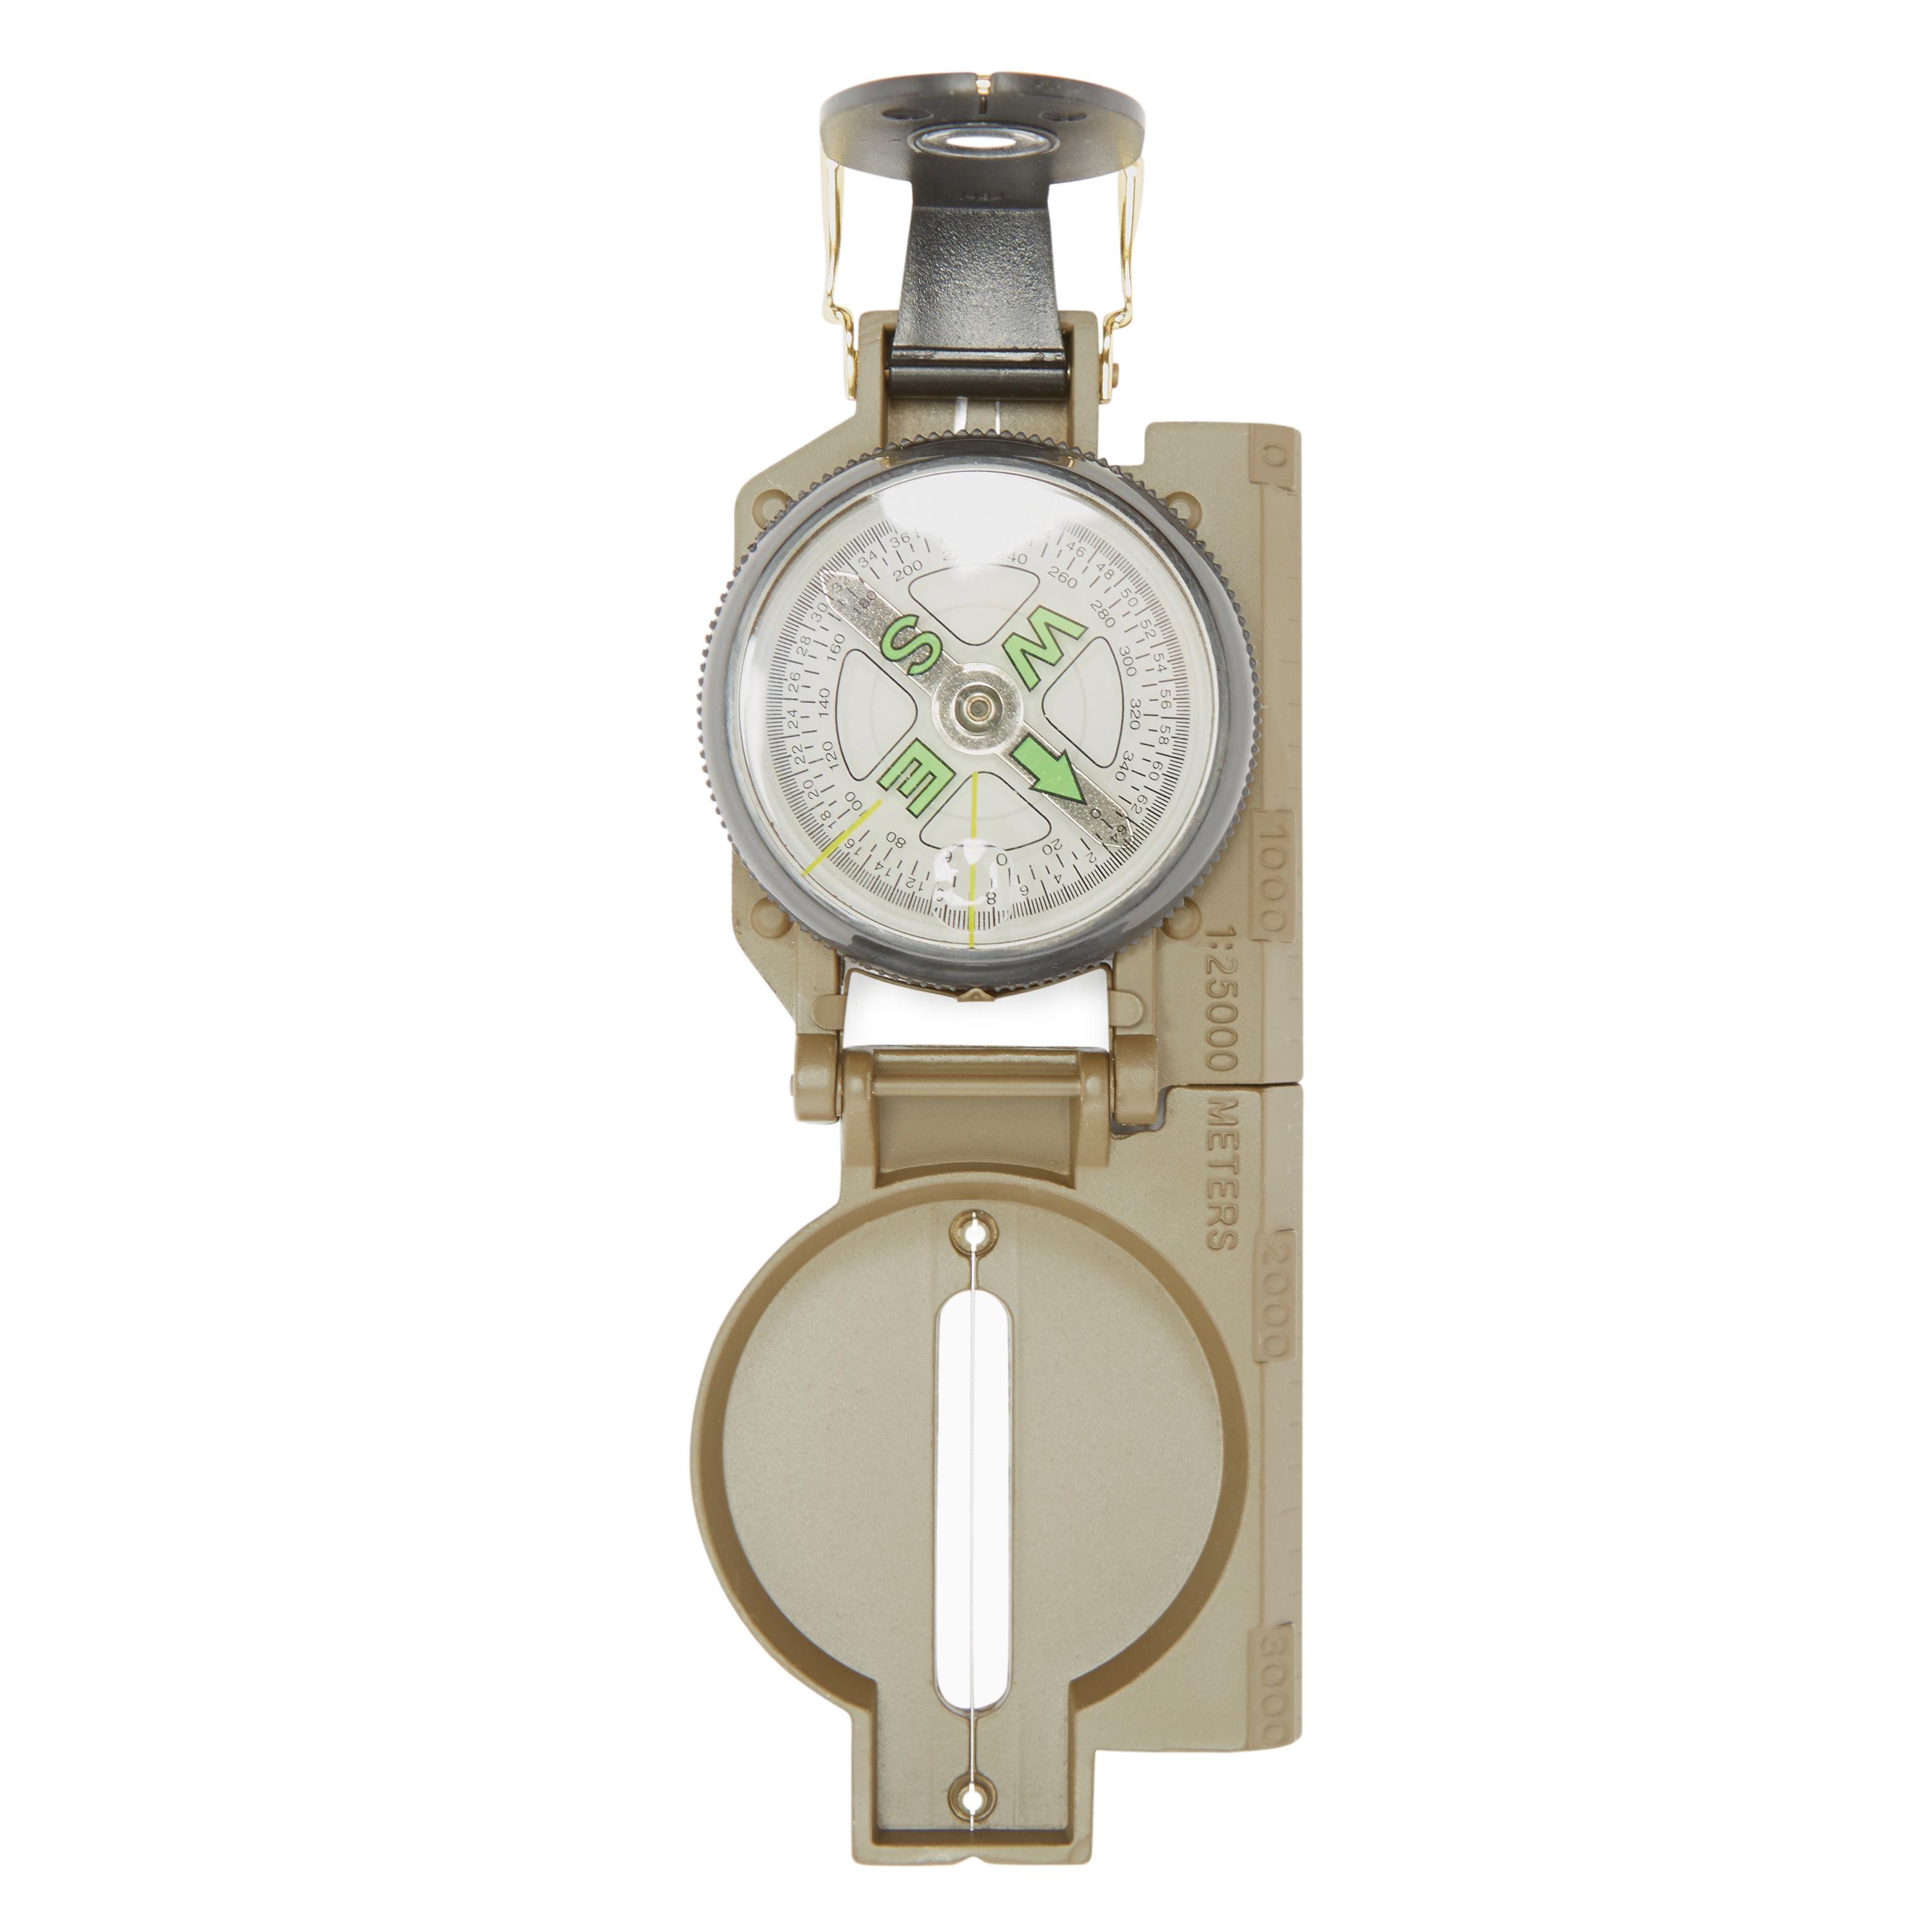 Eurohike Dlx Lensatic Compass - Multi/compass  Multi/compass